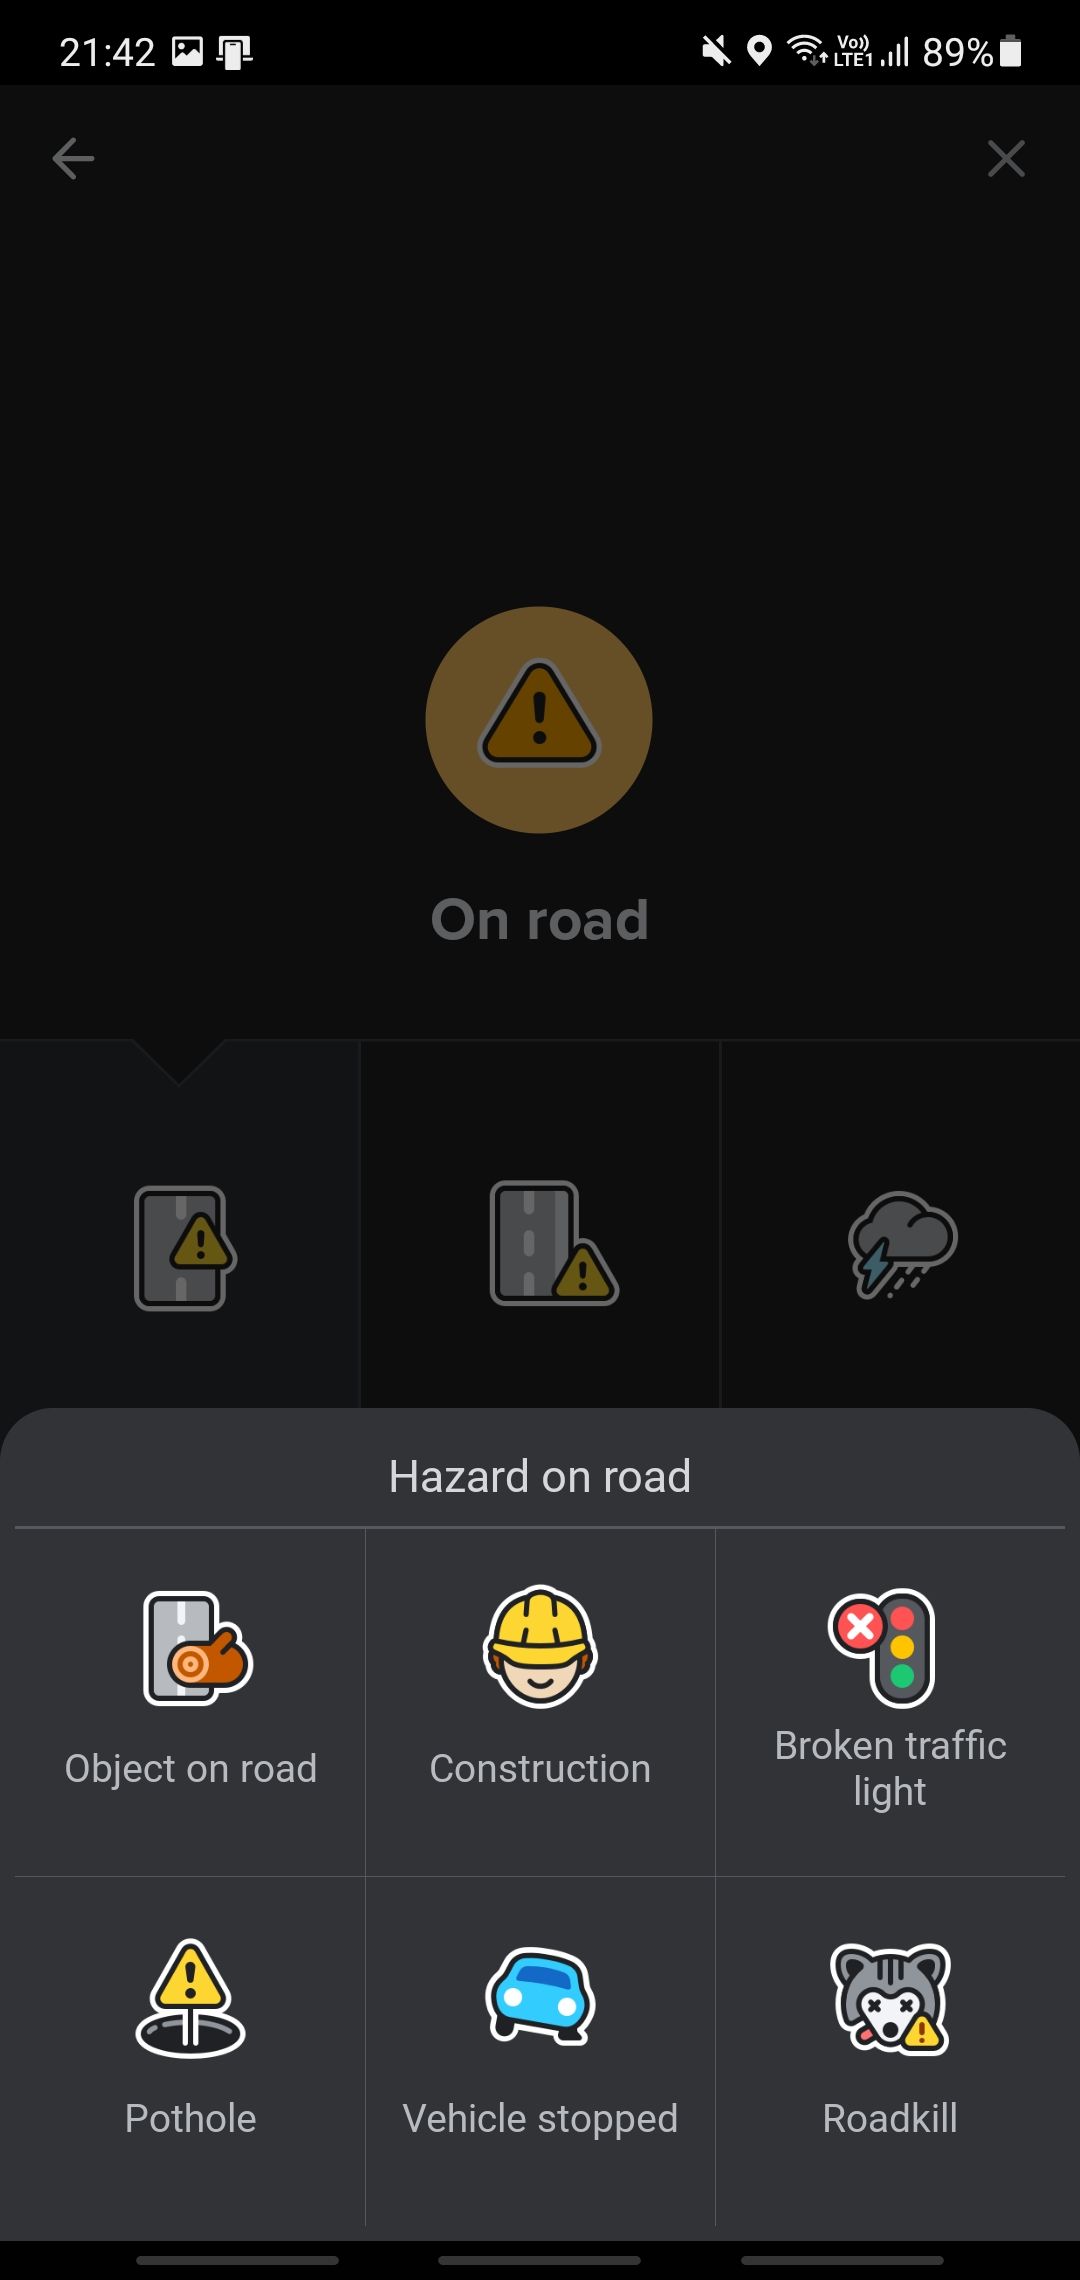 Reporting Road Hazards on Waze